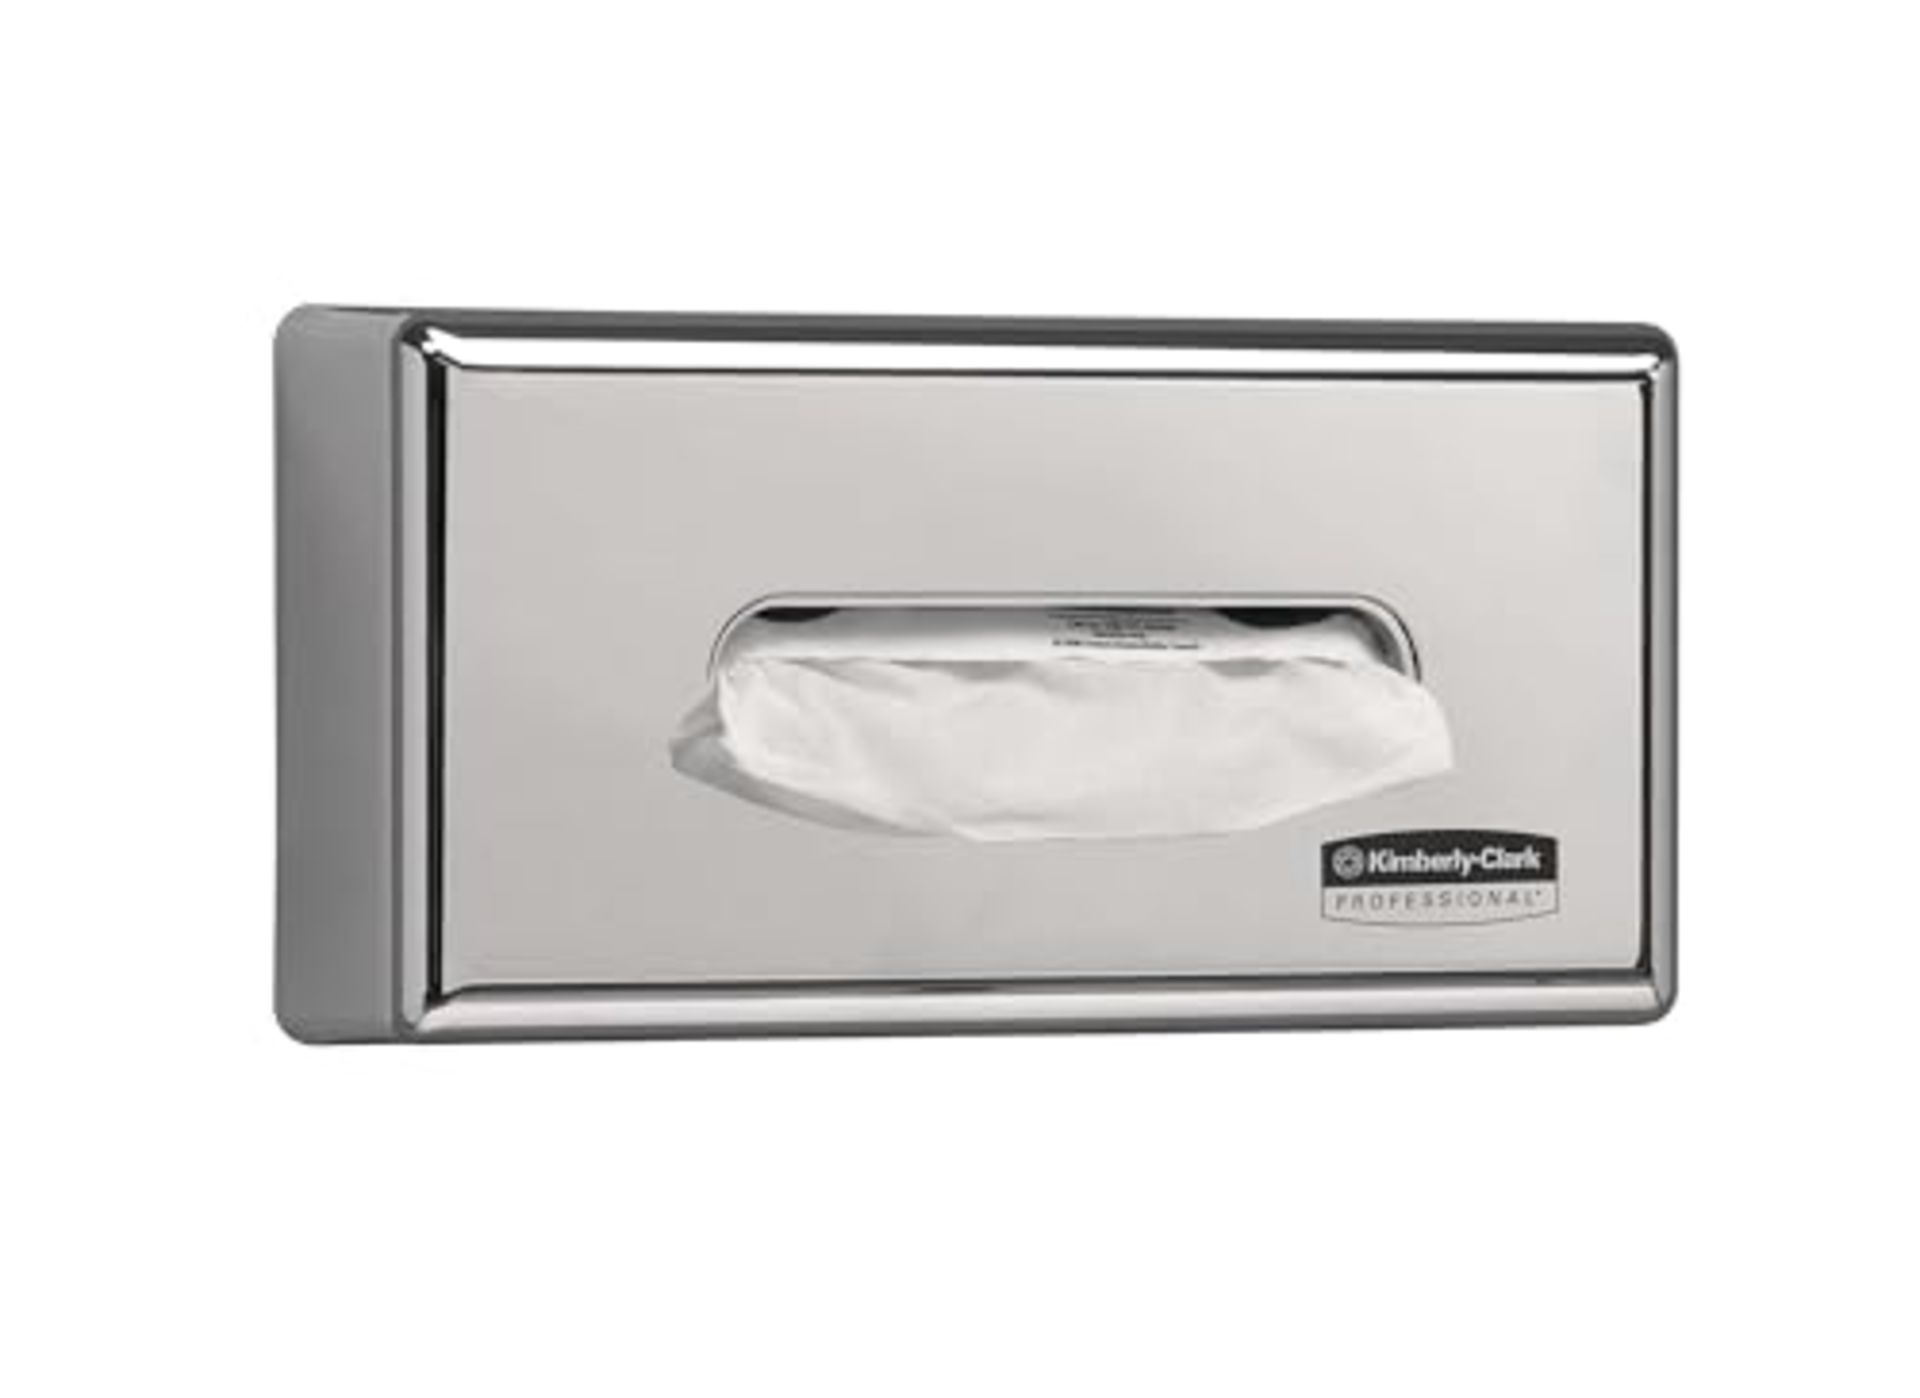 Kimberly-Clark Professional, 7820, Facial Tissue Dispenser, Silver, 1 x 1 Dispenser